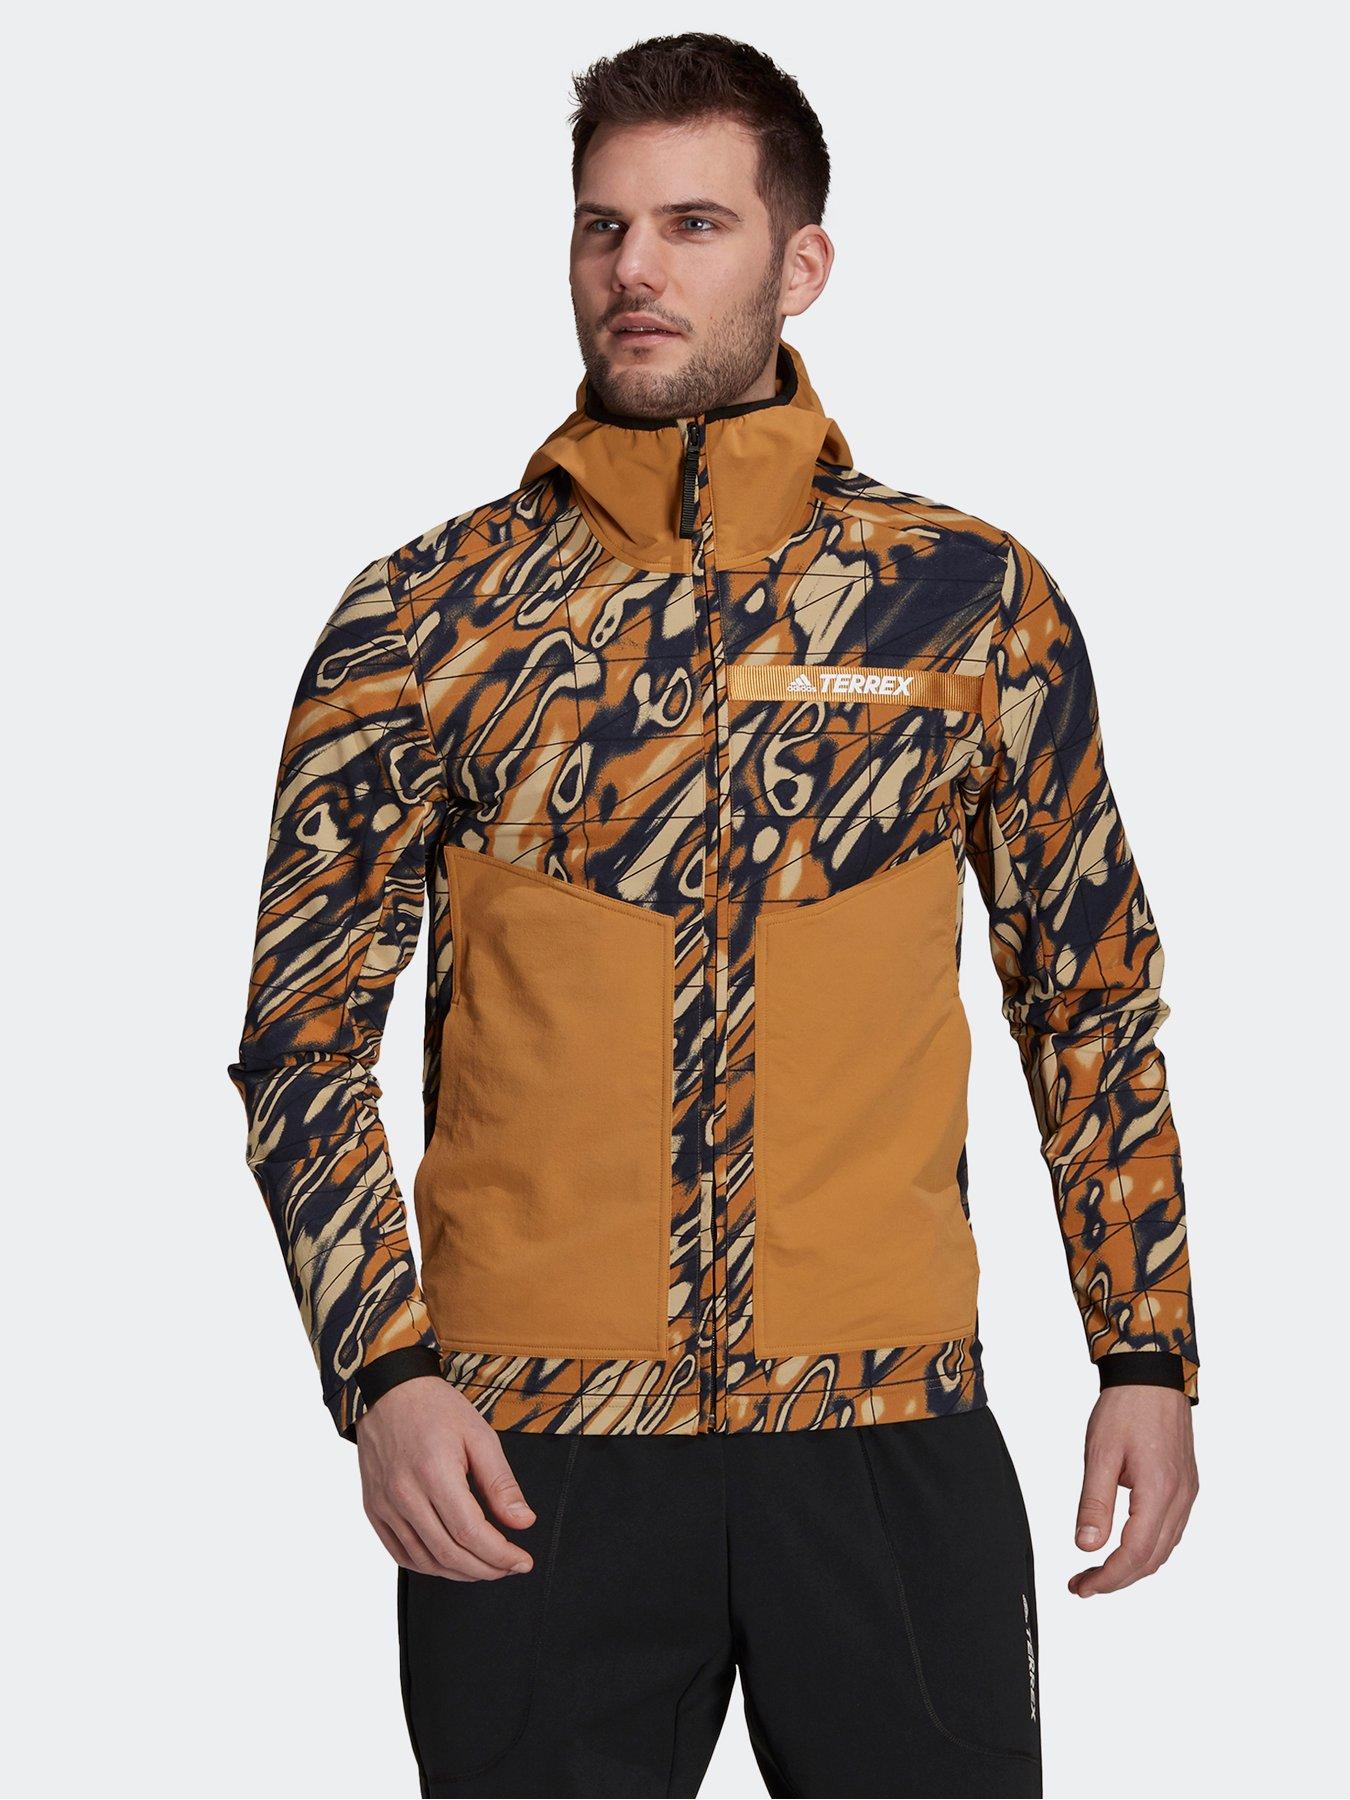  Terrex Multi Graphic Stretch Softshell Jacket